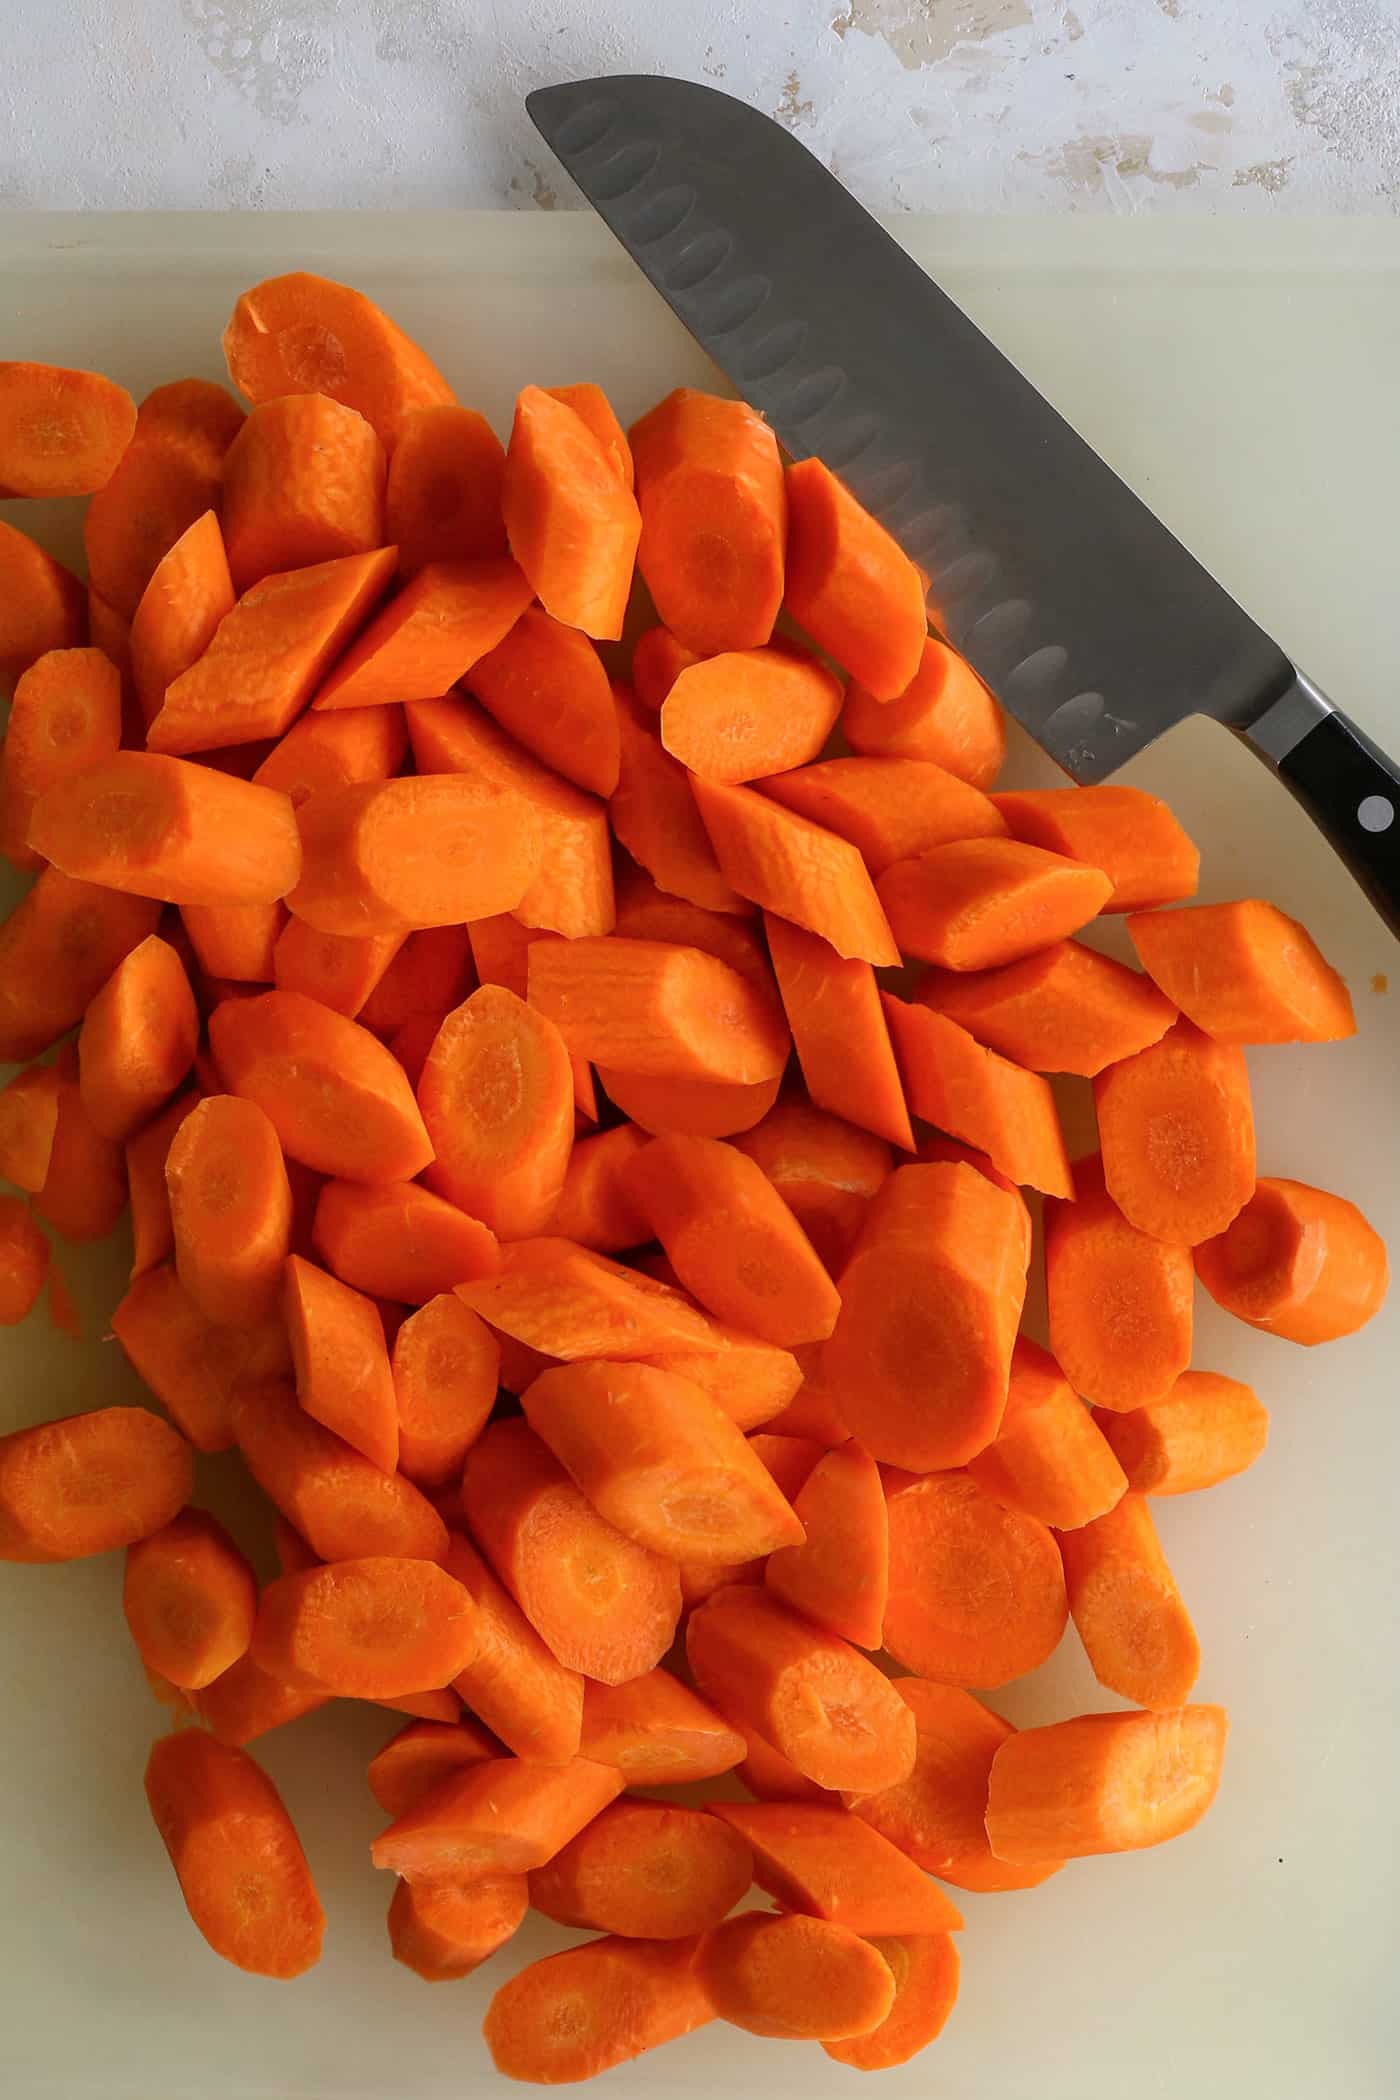 cutting carrots on a cutting board